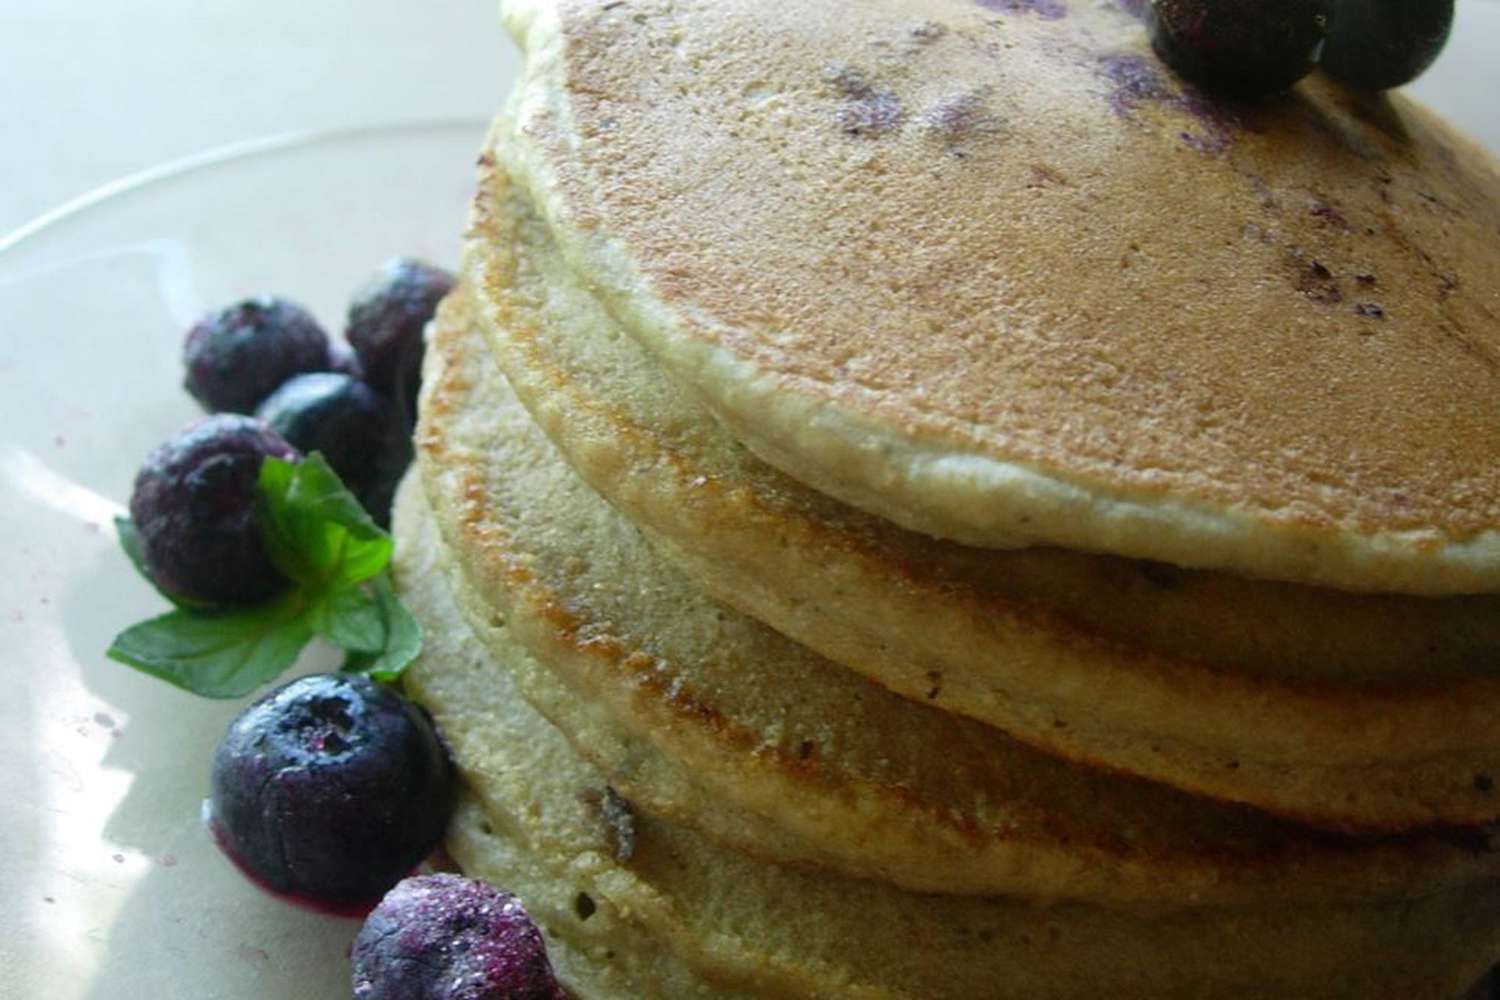 Whole Wheat Blueberry Pancakes